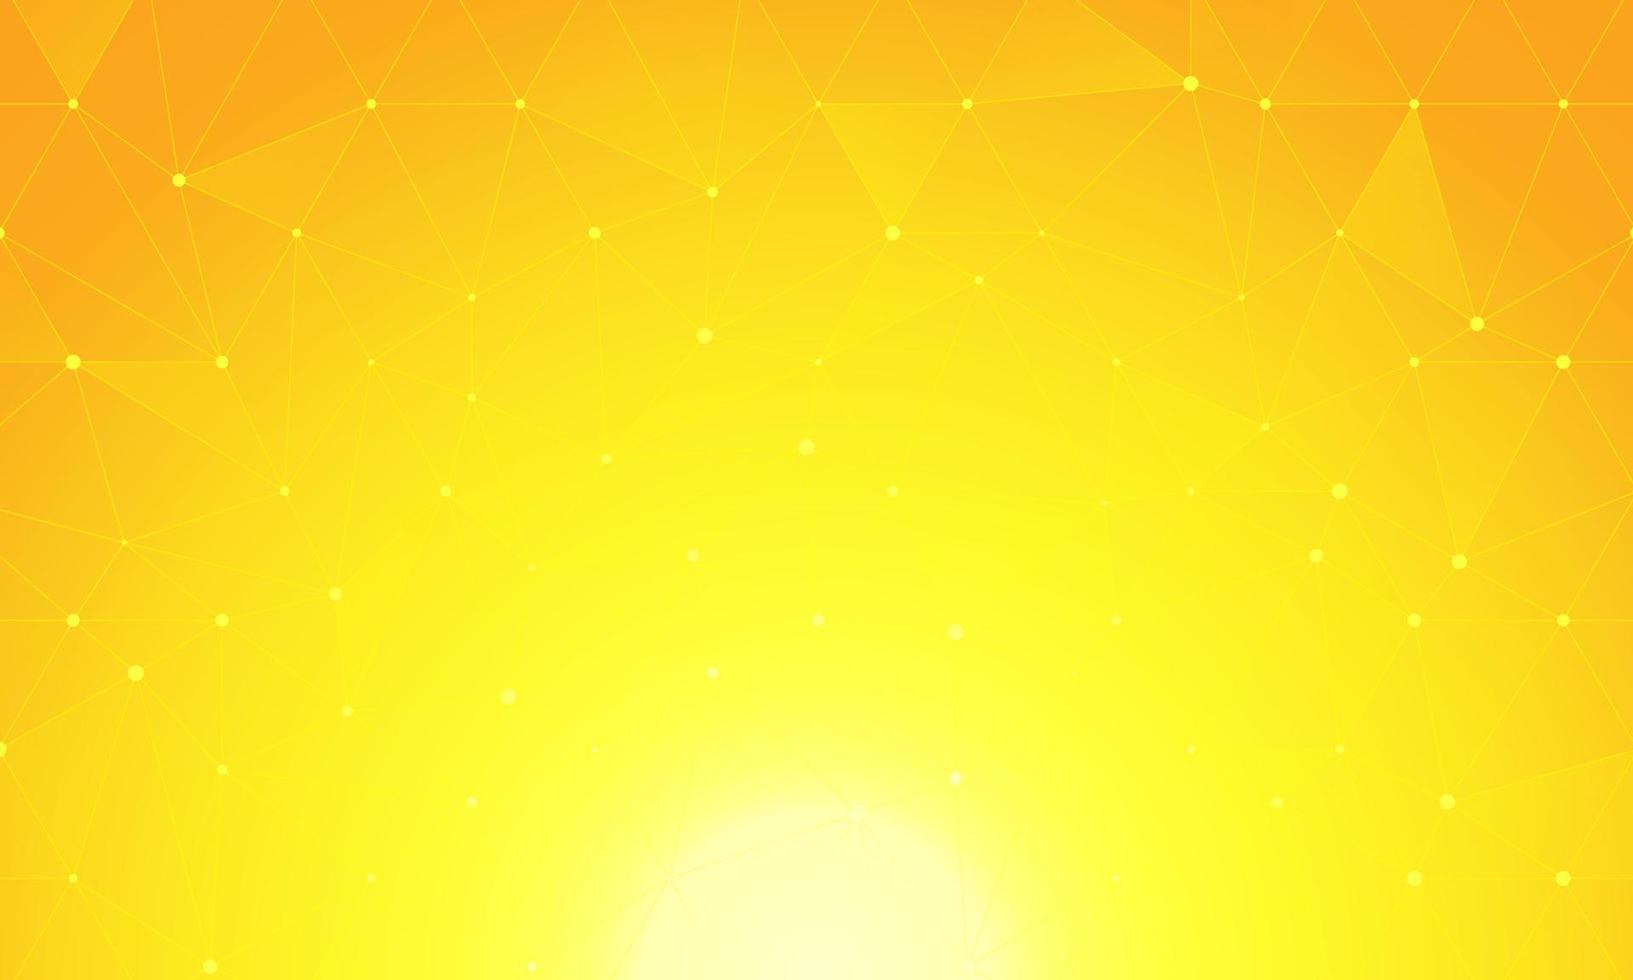 Sunburst digital low poly background vector